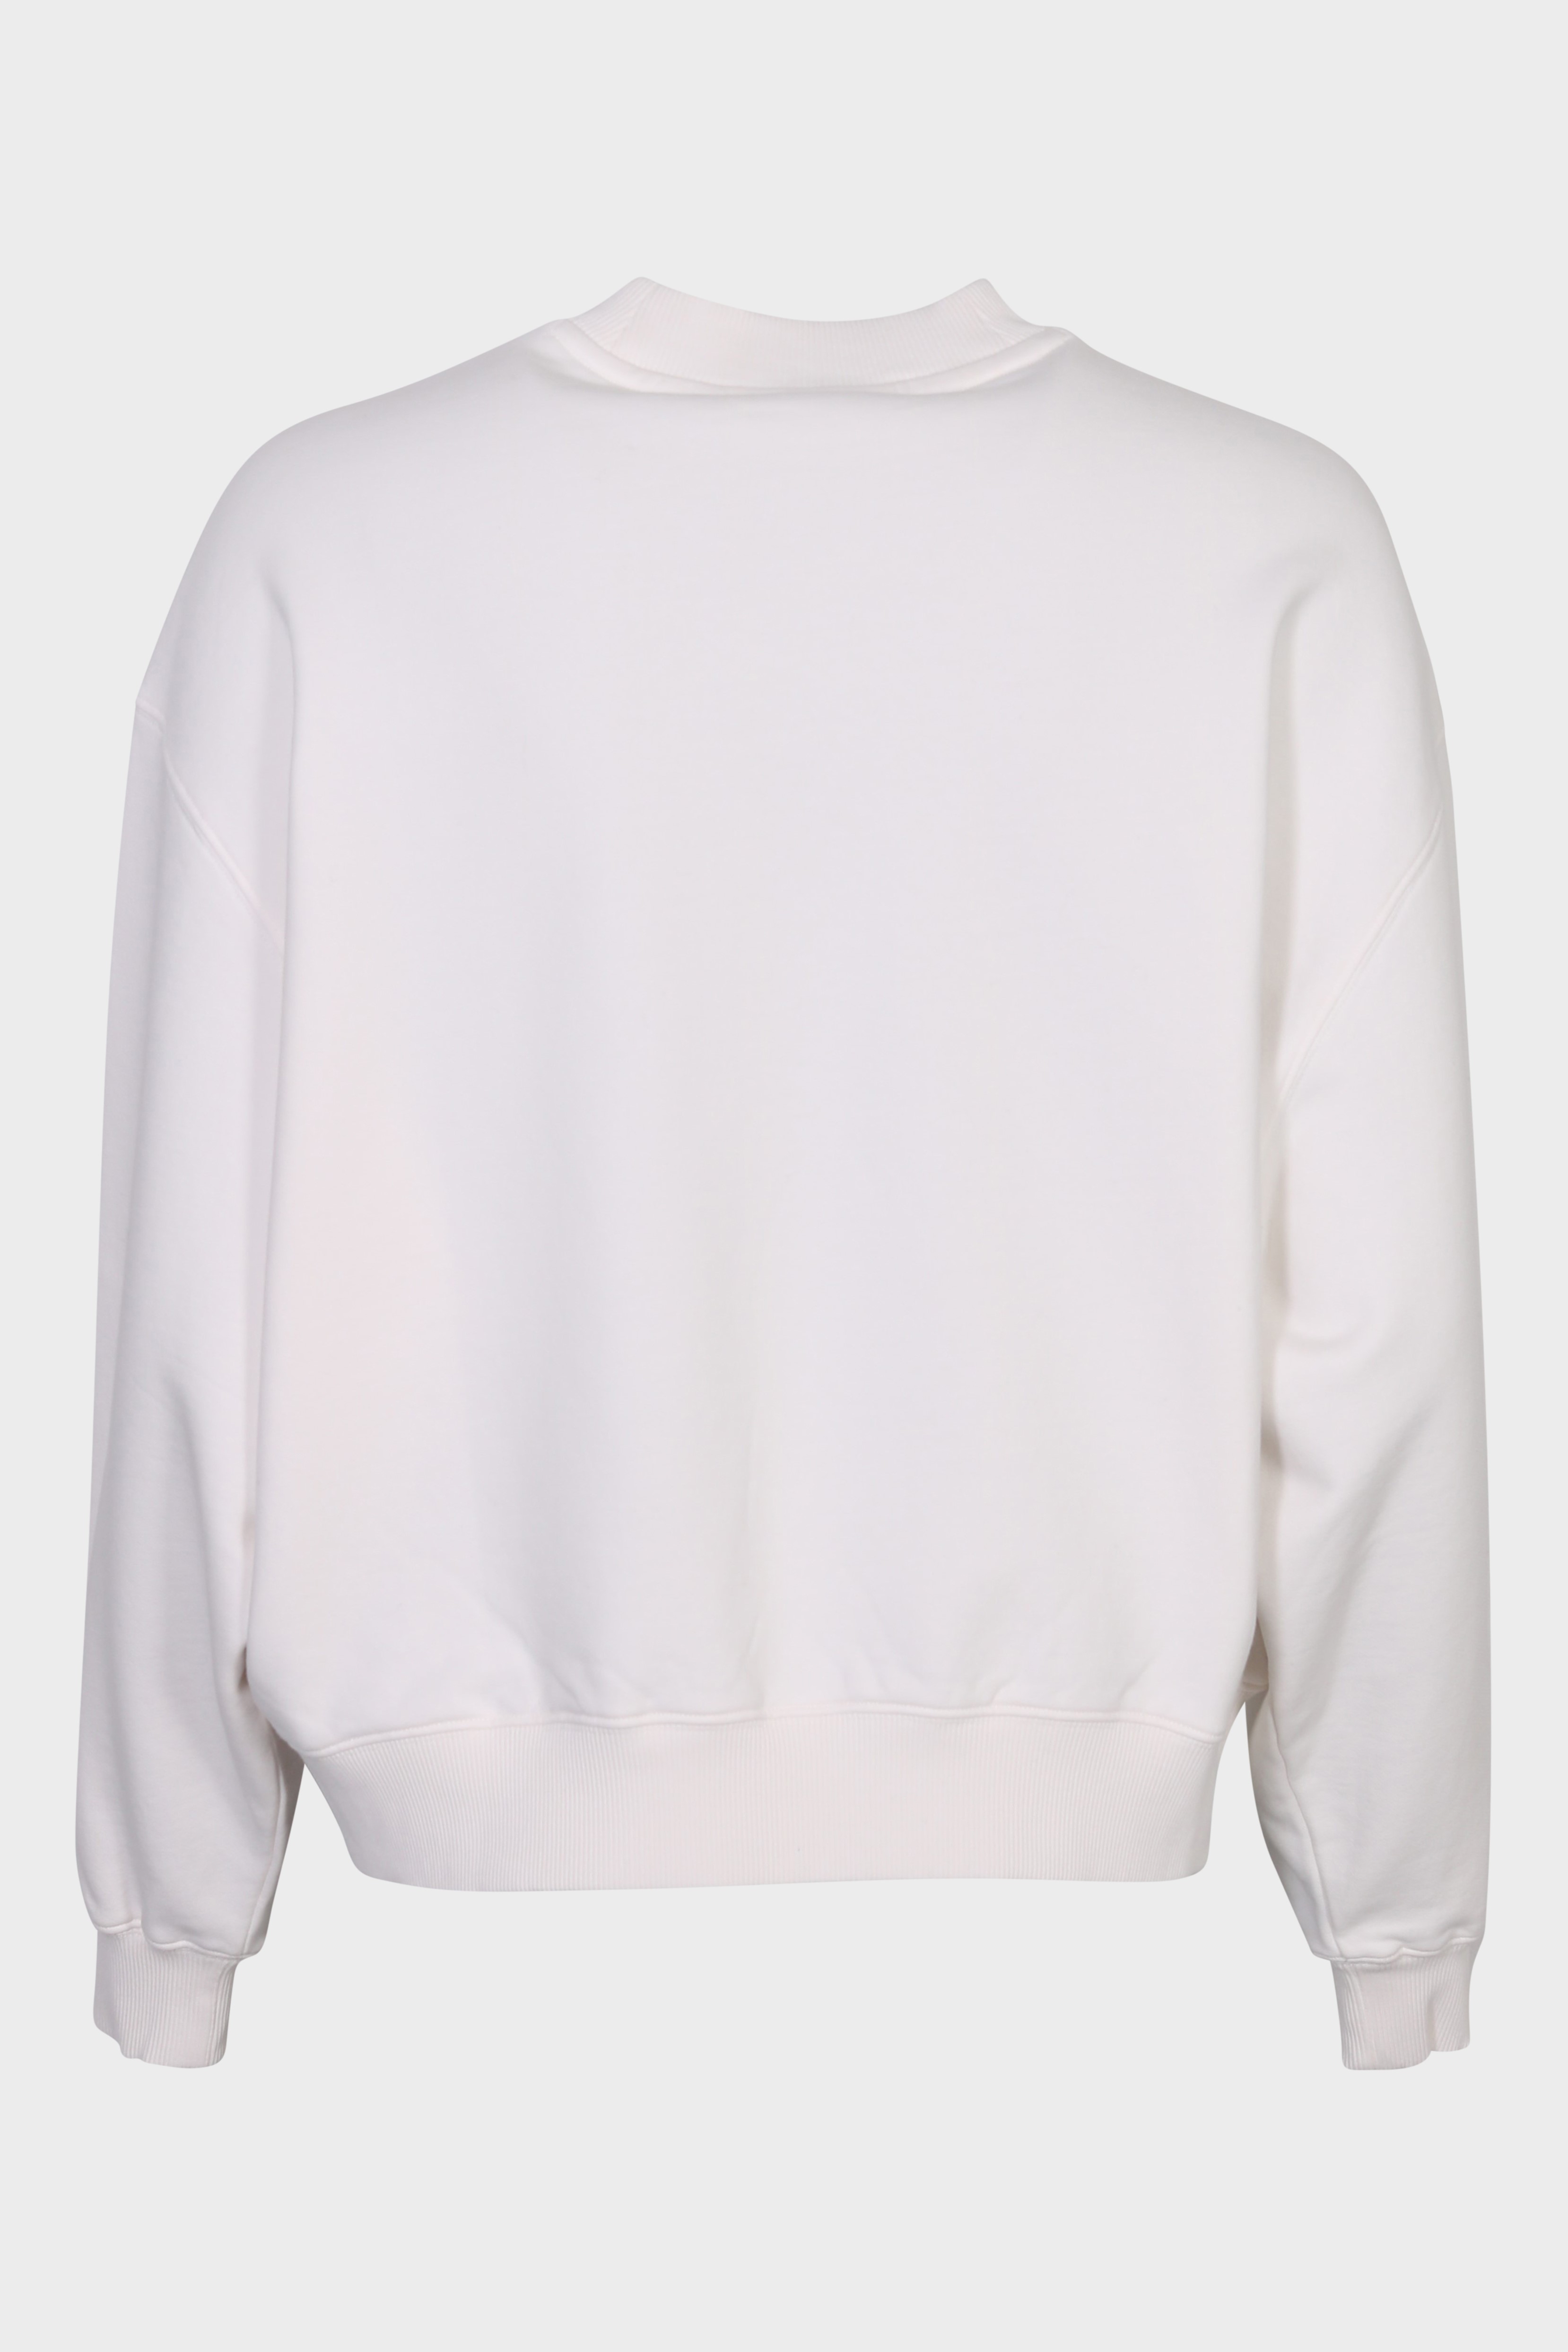 AXEL ARIGATO University Sweatshirt in Off White XS